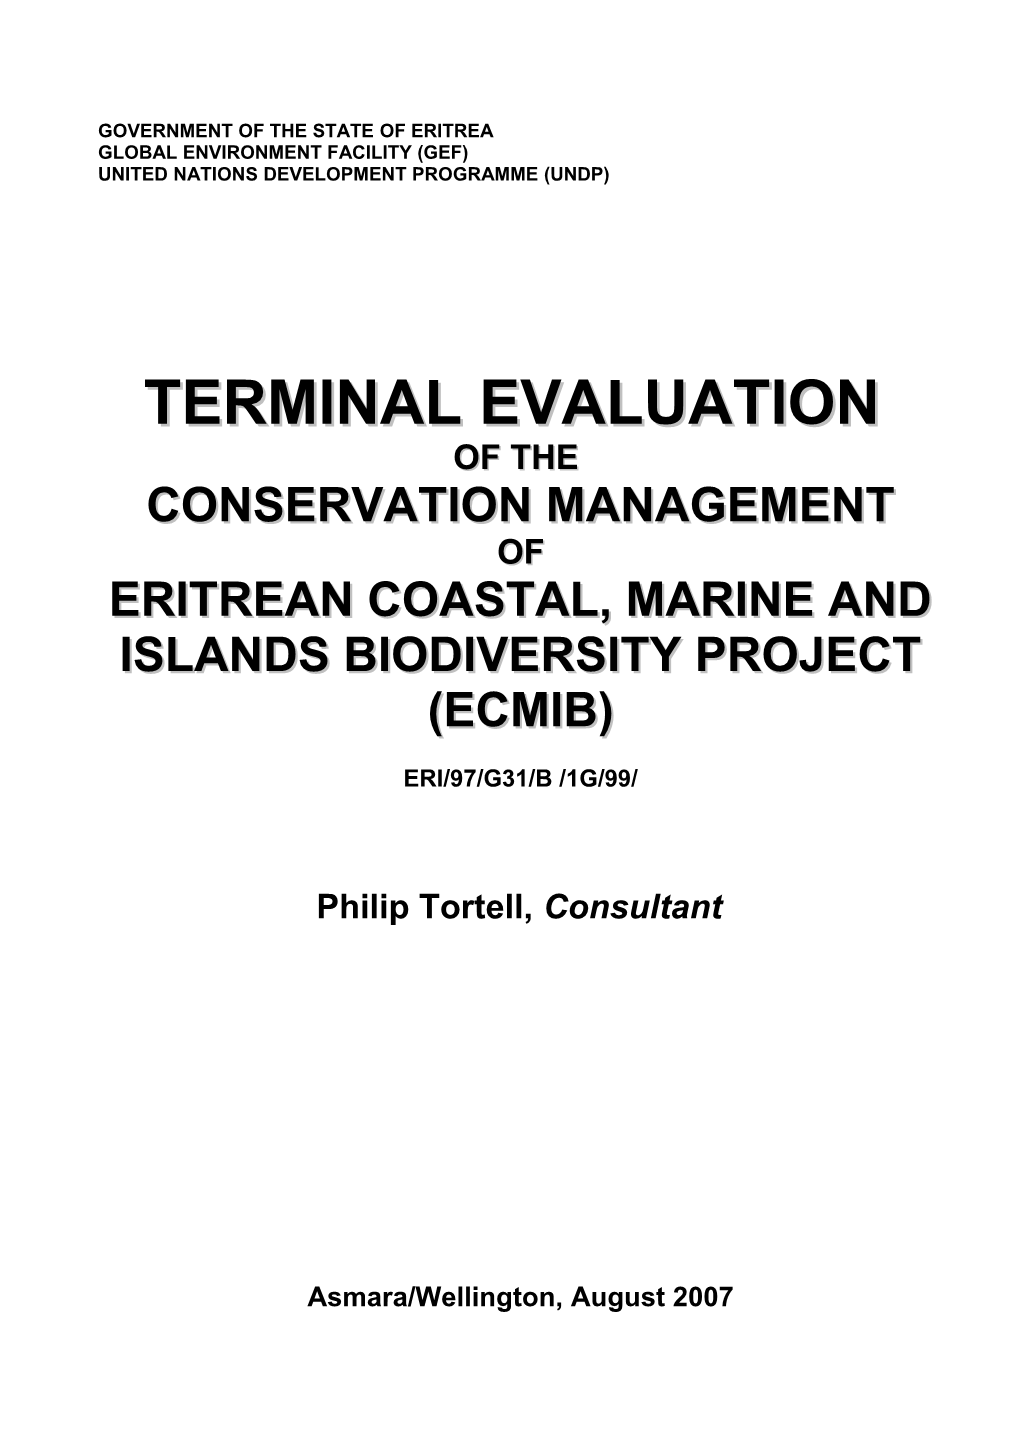 Eritrean Coastal, Marine and Islands Biodiversity Project (ECMIB) : TERMINAL EVALUATION